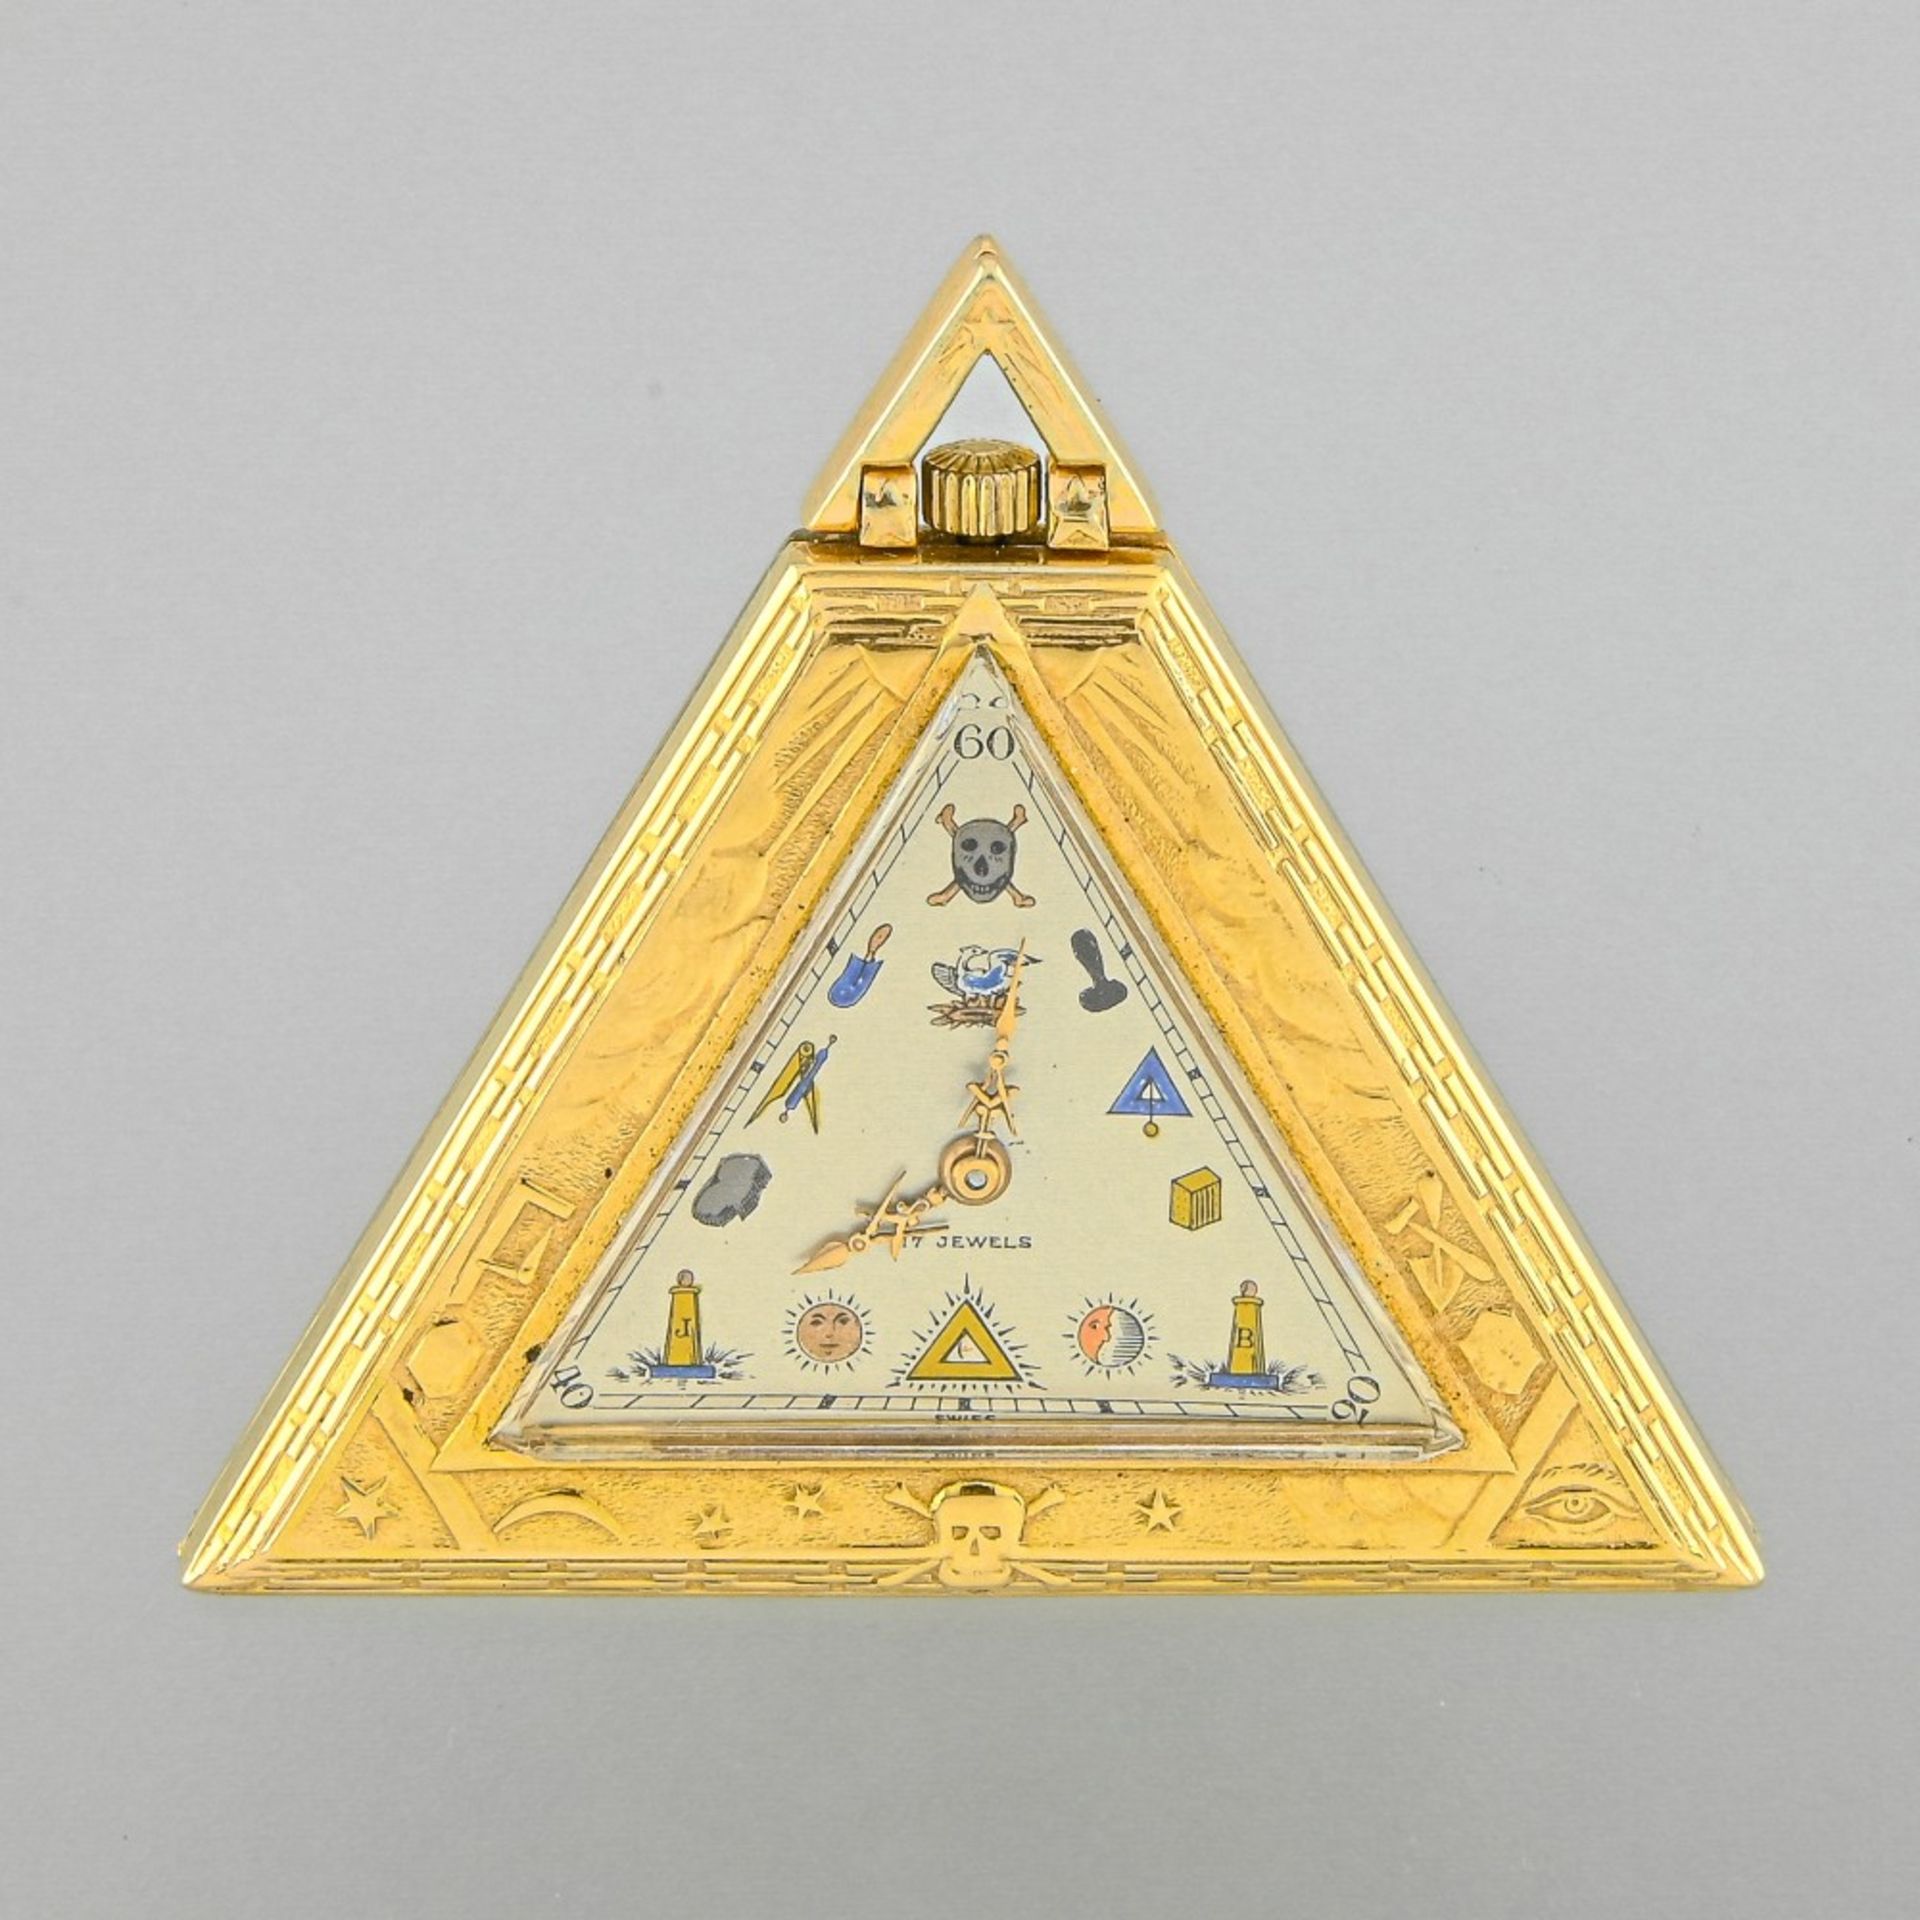 Masonic pocket watch Gold-plated triangular case, decorated with masonic symbols. Silvered champagne